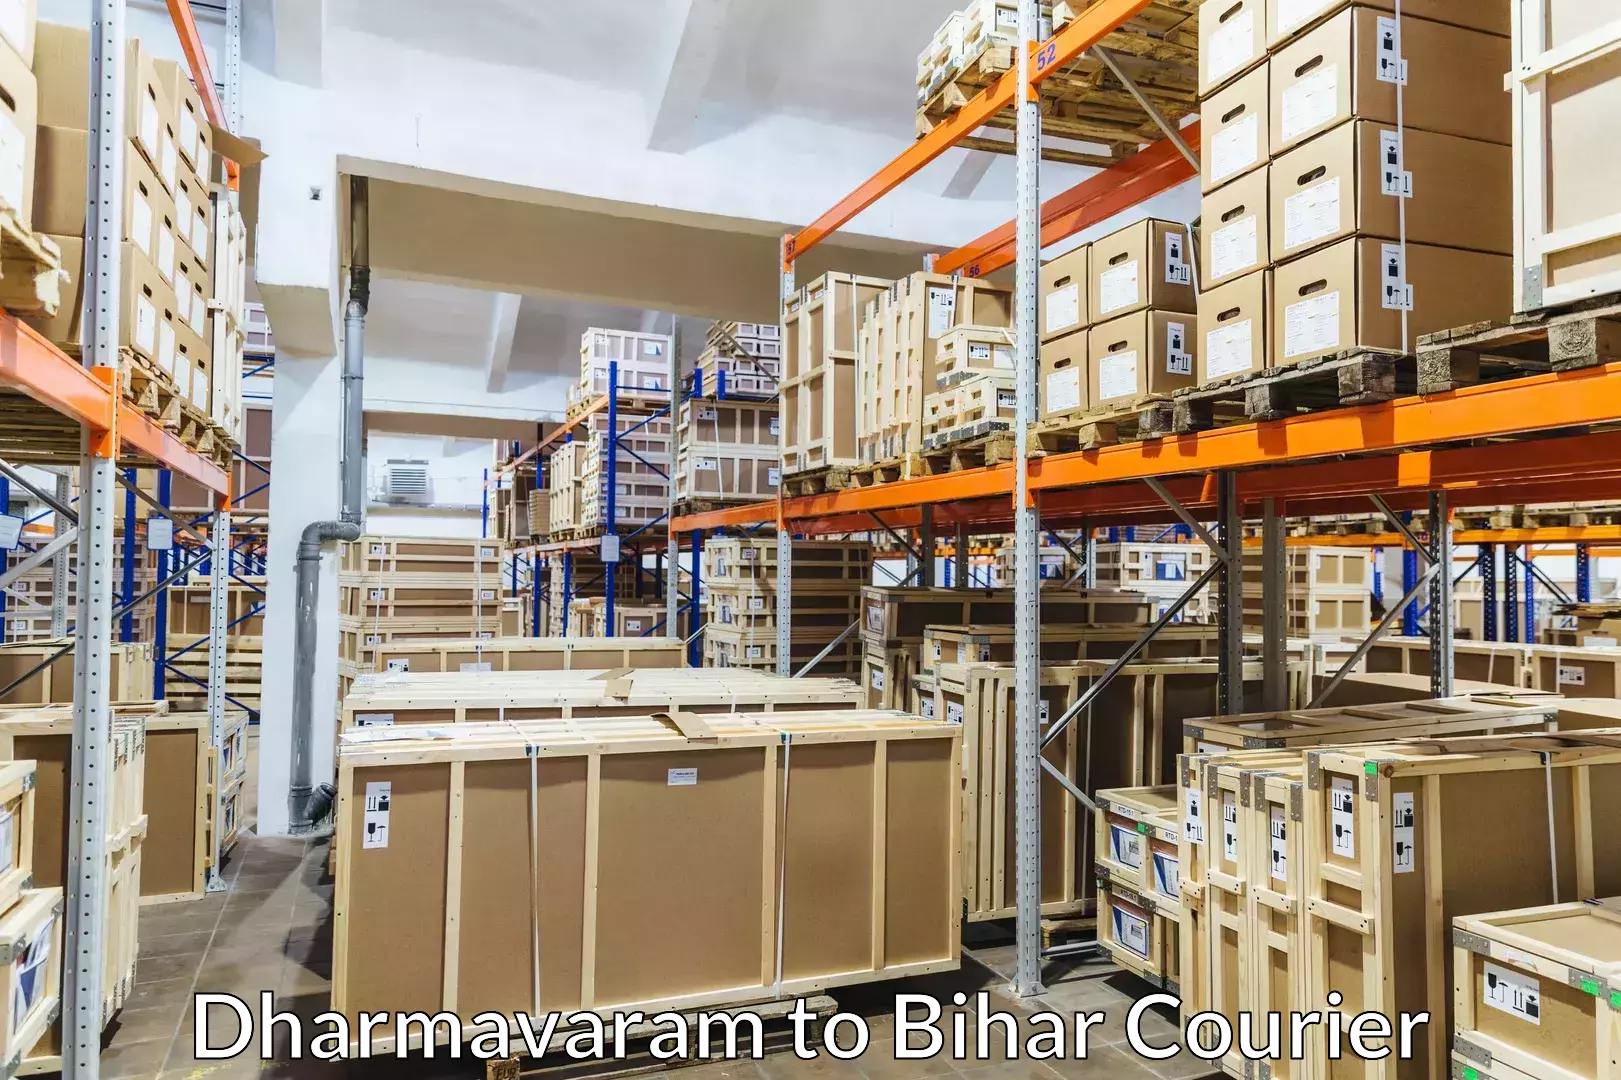 Trusted relocation experts Dharmavaram to Bikramganj